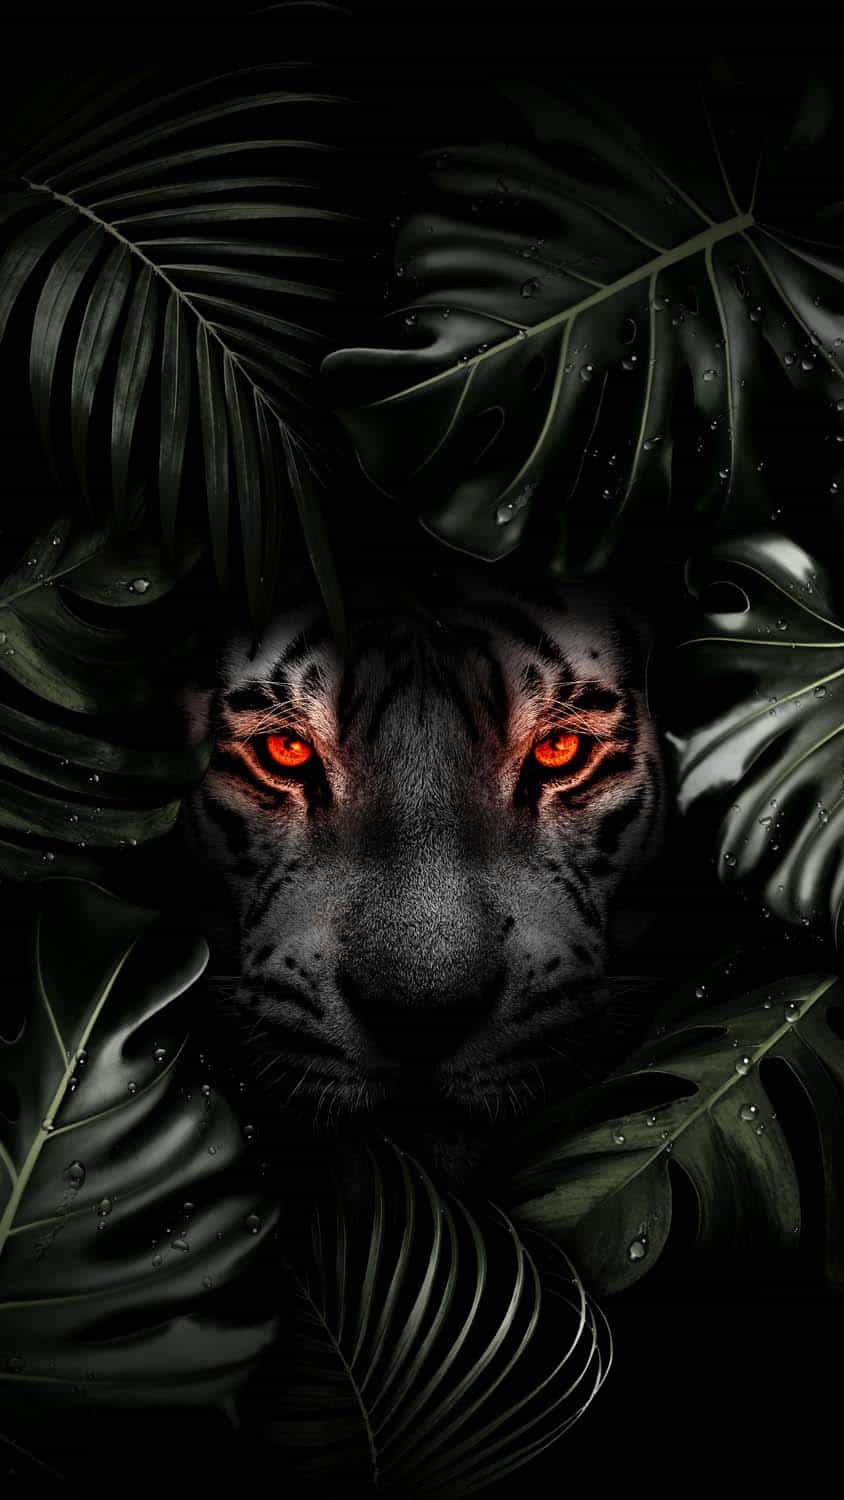 Predator Tiger IPhone Wallpaper HD - IPhone Wallpapers : iPhone Wallpapers